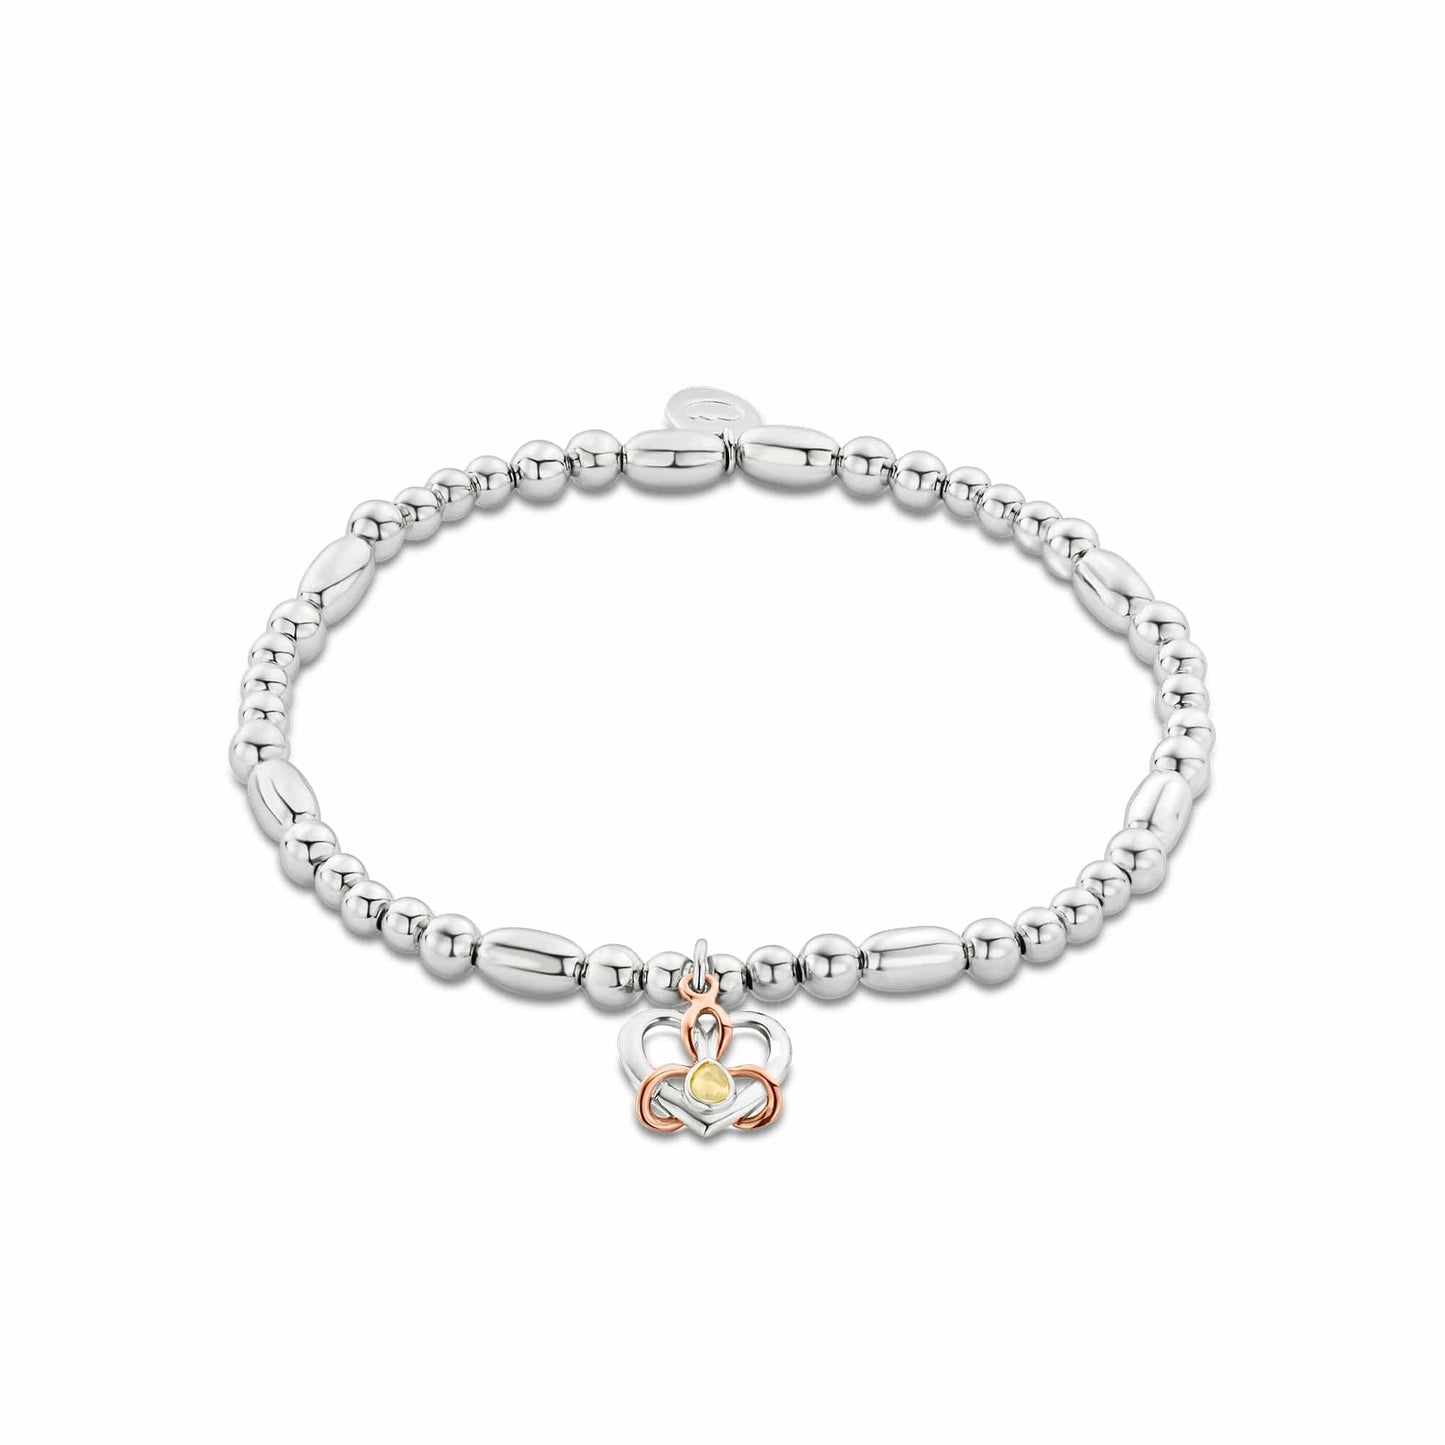 Dwynwen Silver and Opal Affinity Bracelet